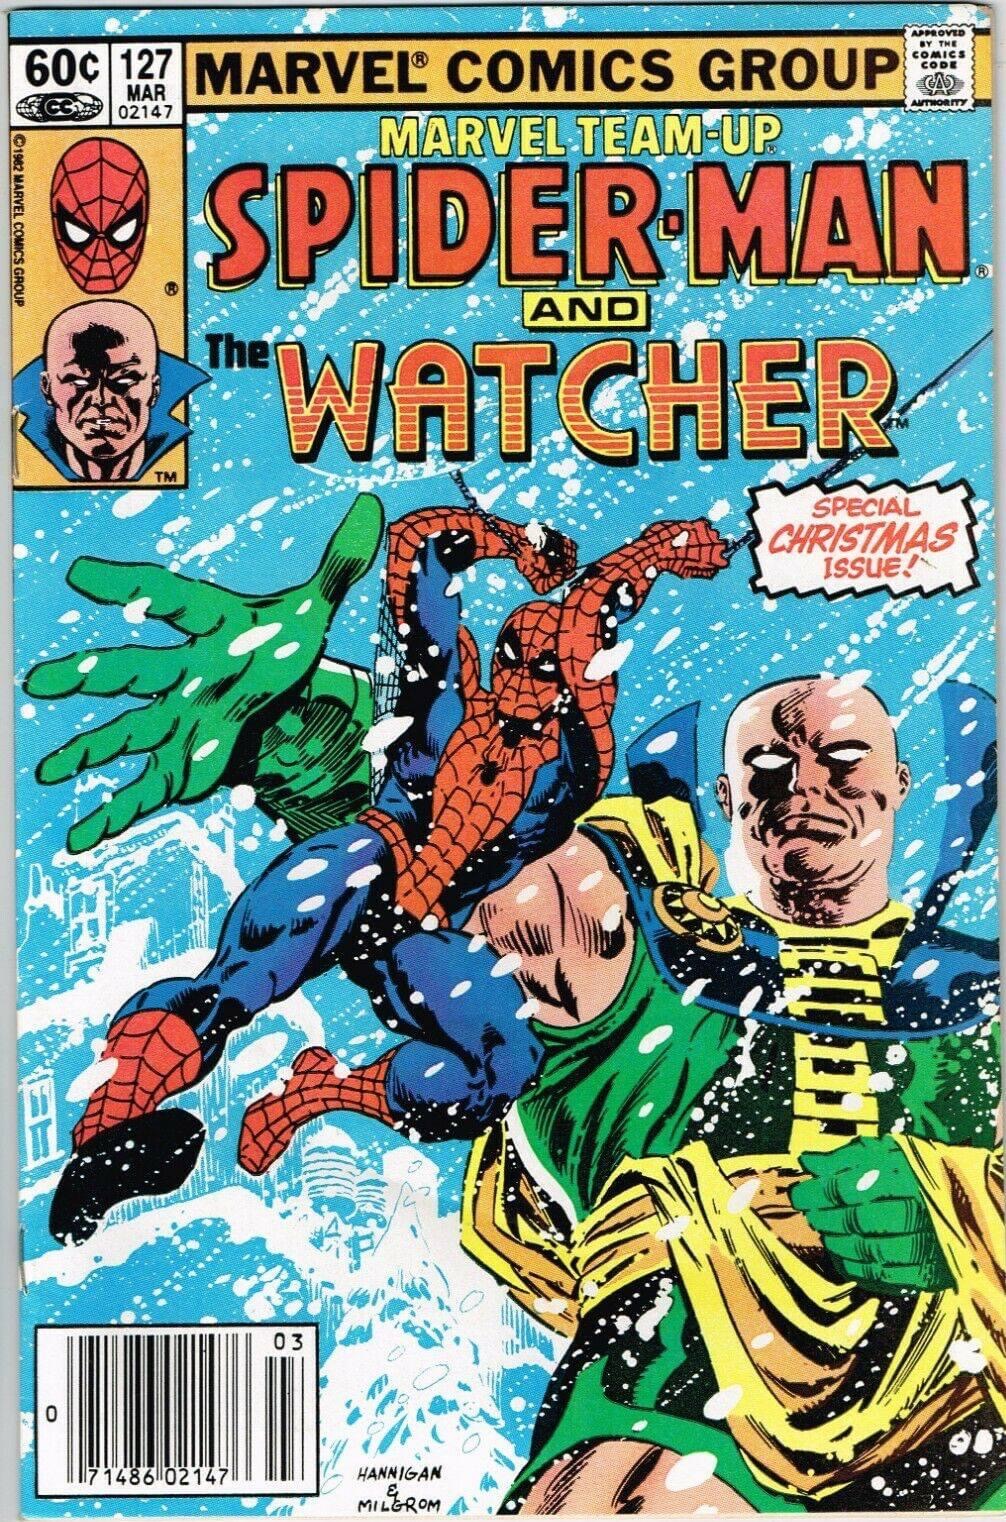 The Watcher Reading Order! - Comic Book Herald